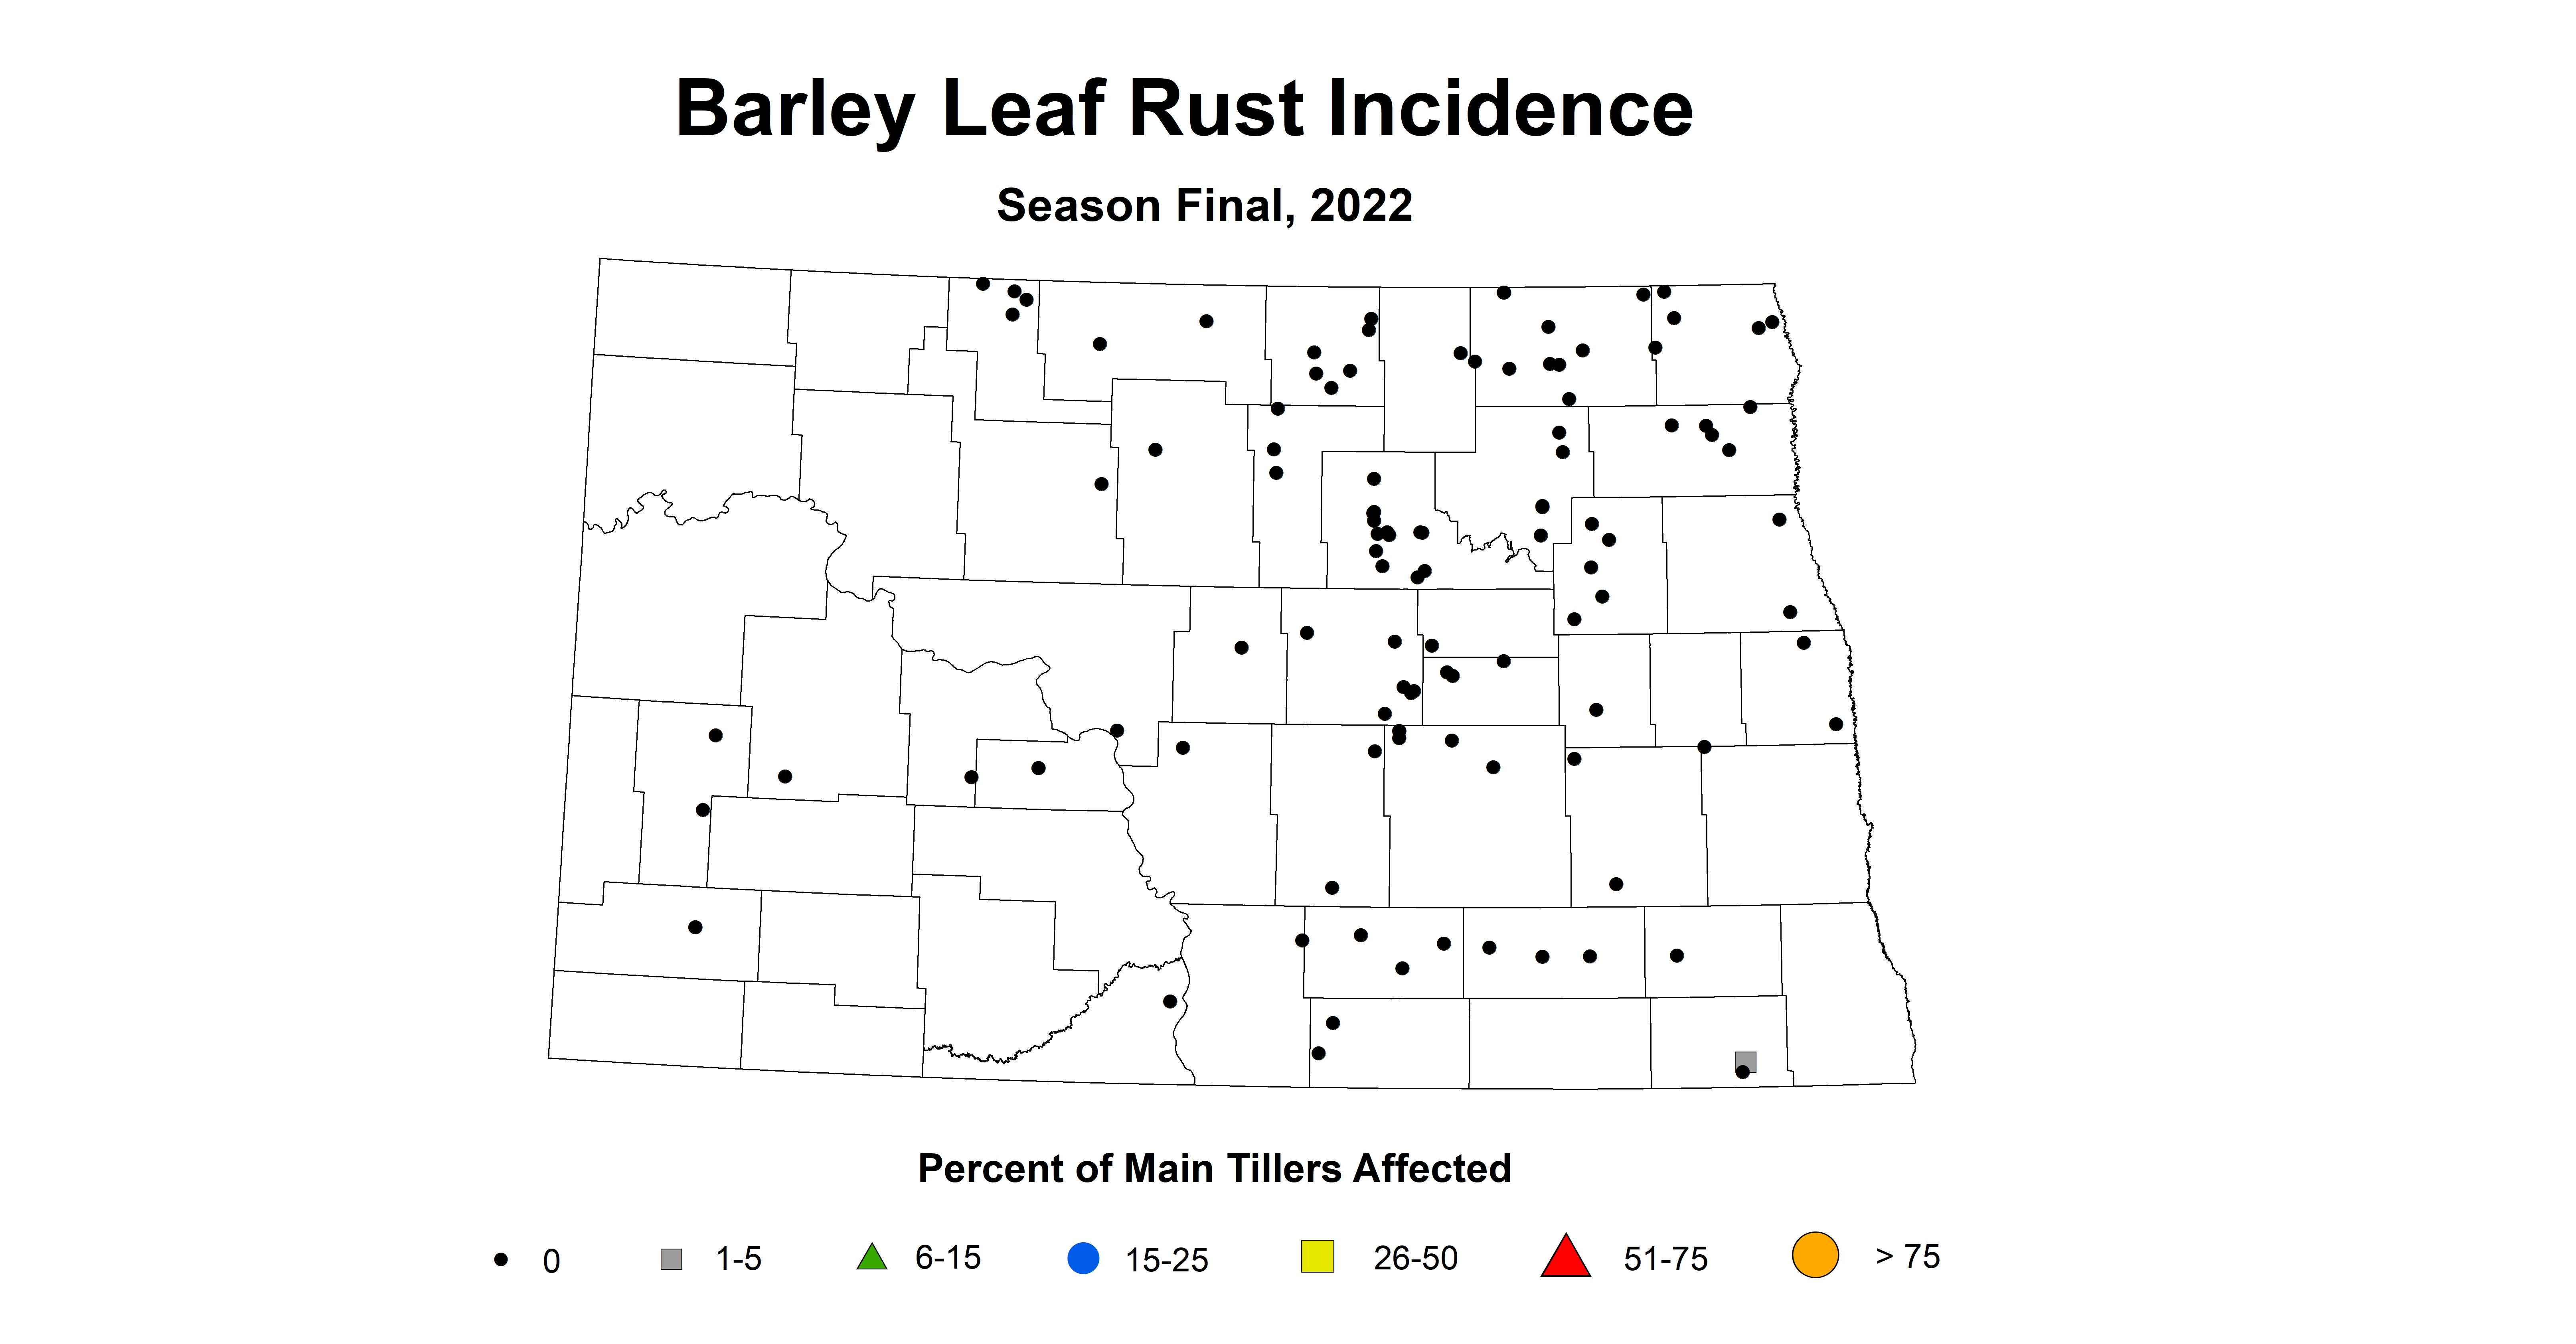 barley leaf rust incidence 2022 season final